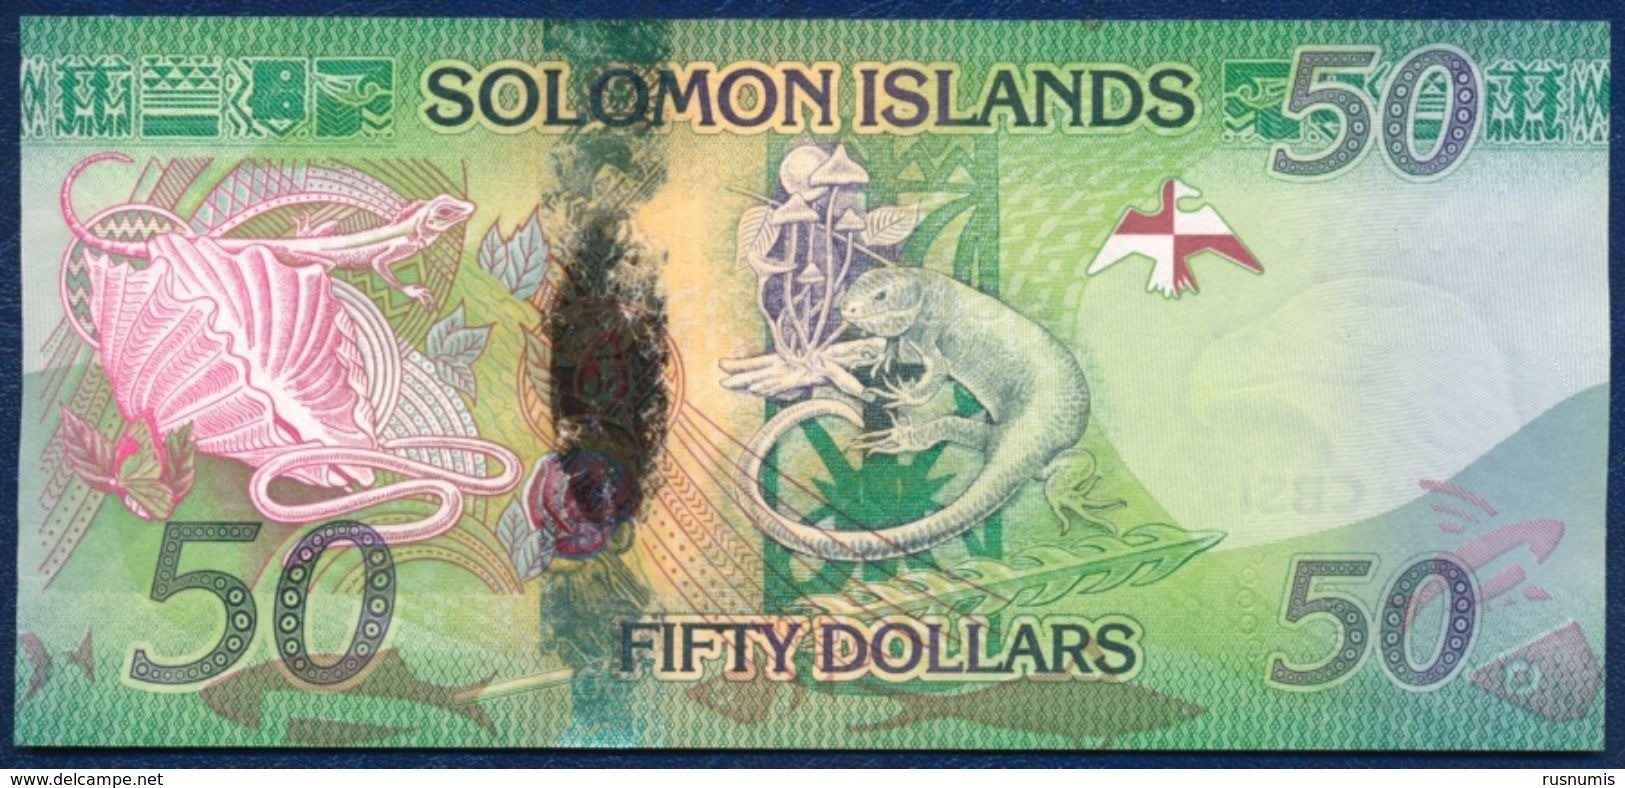 SOLOMON ISLANDS 50 DOLLARS P-35a LIZARD 2013 UNC - Isla Salomon